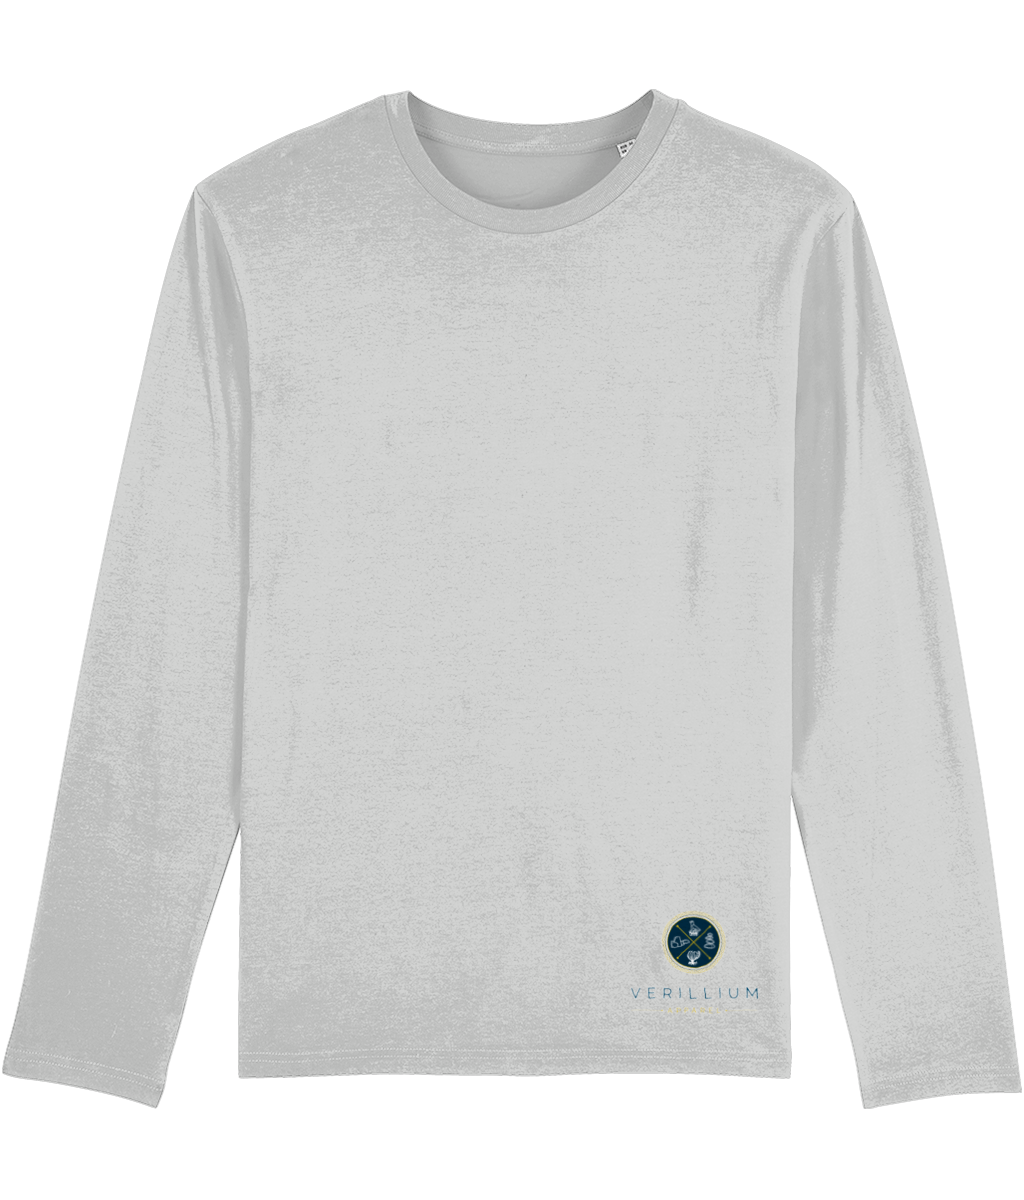 Men's Shuffler Long Sleeved T-shirt - Verillium Apparel